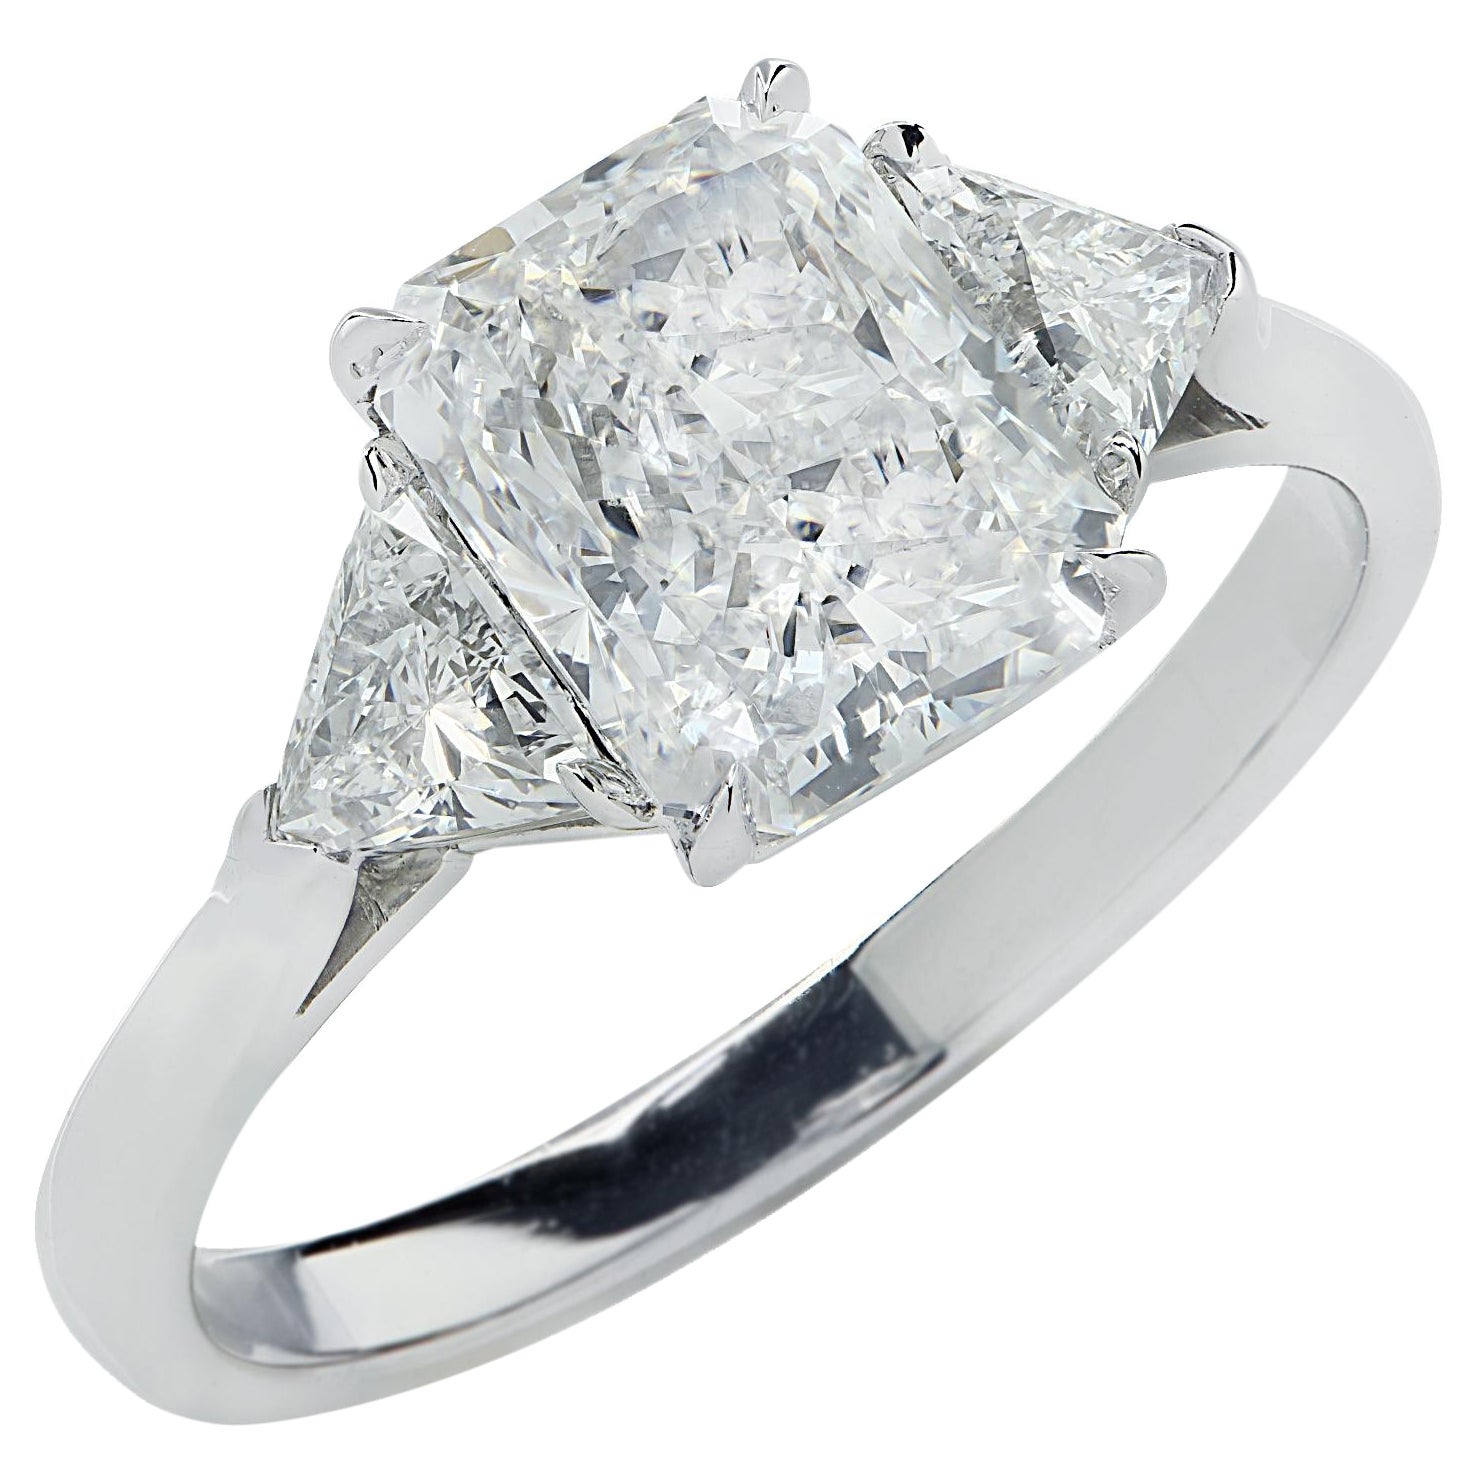 Vivid Diamonds GIA Certified 2.02 Carat Radiant Cut Engagement Ring